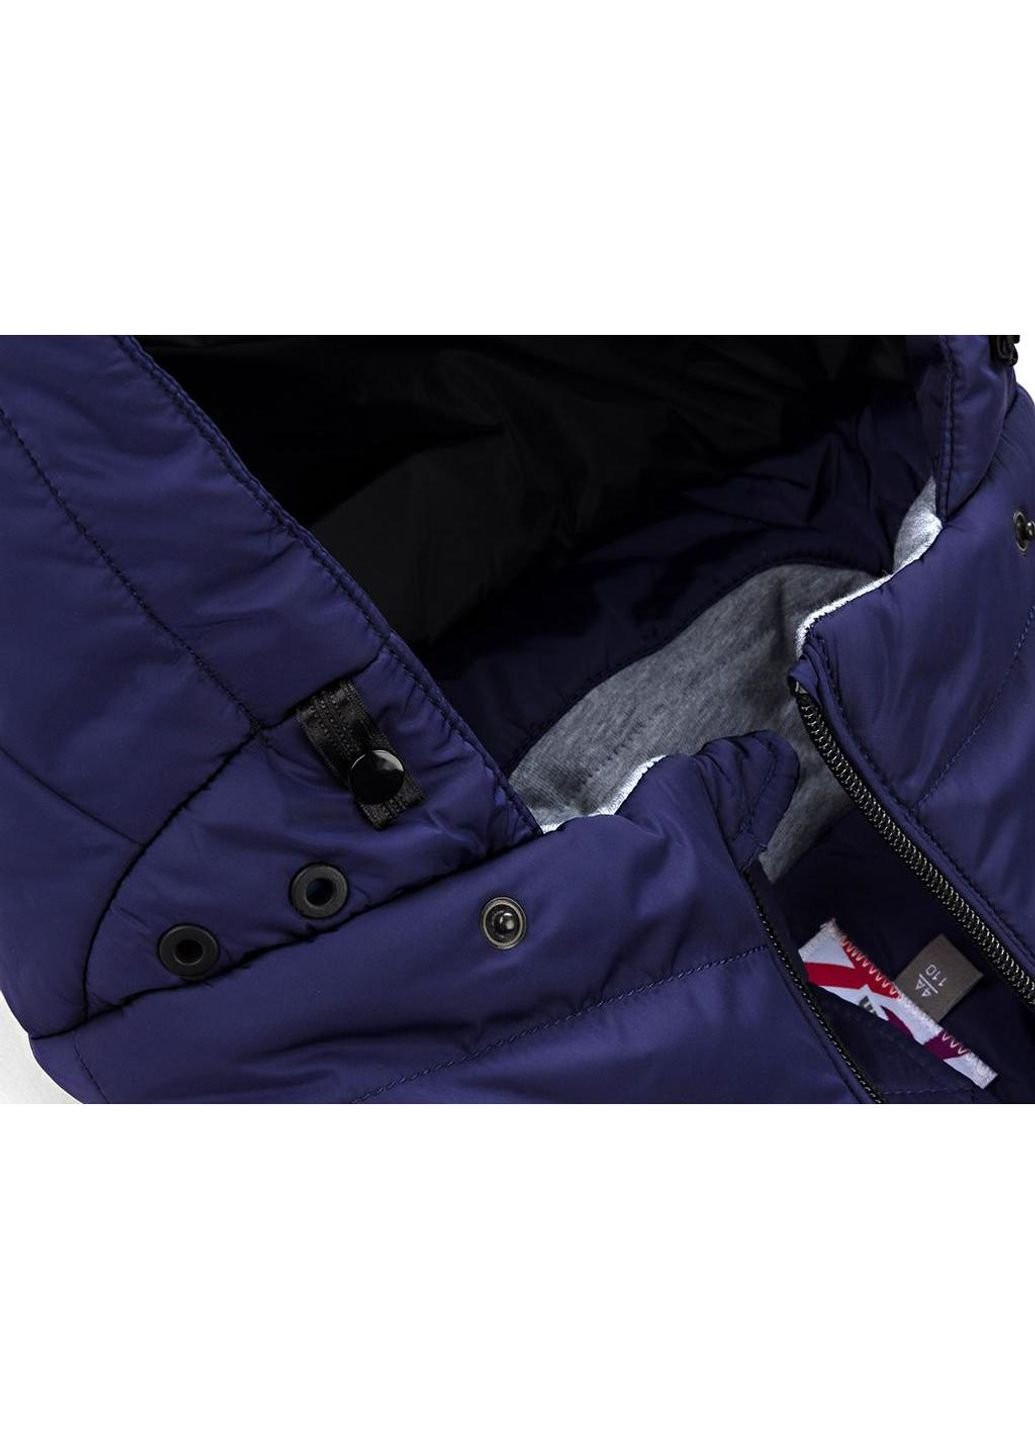 Фіолетова демісезонна куртка з капюшоном (sicmy-g306-134b-blue) Snowimage